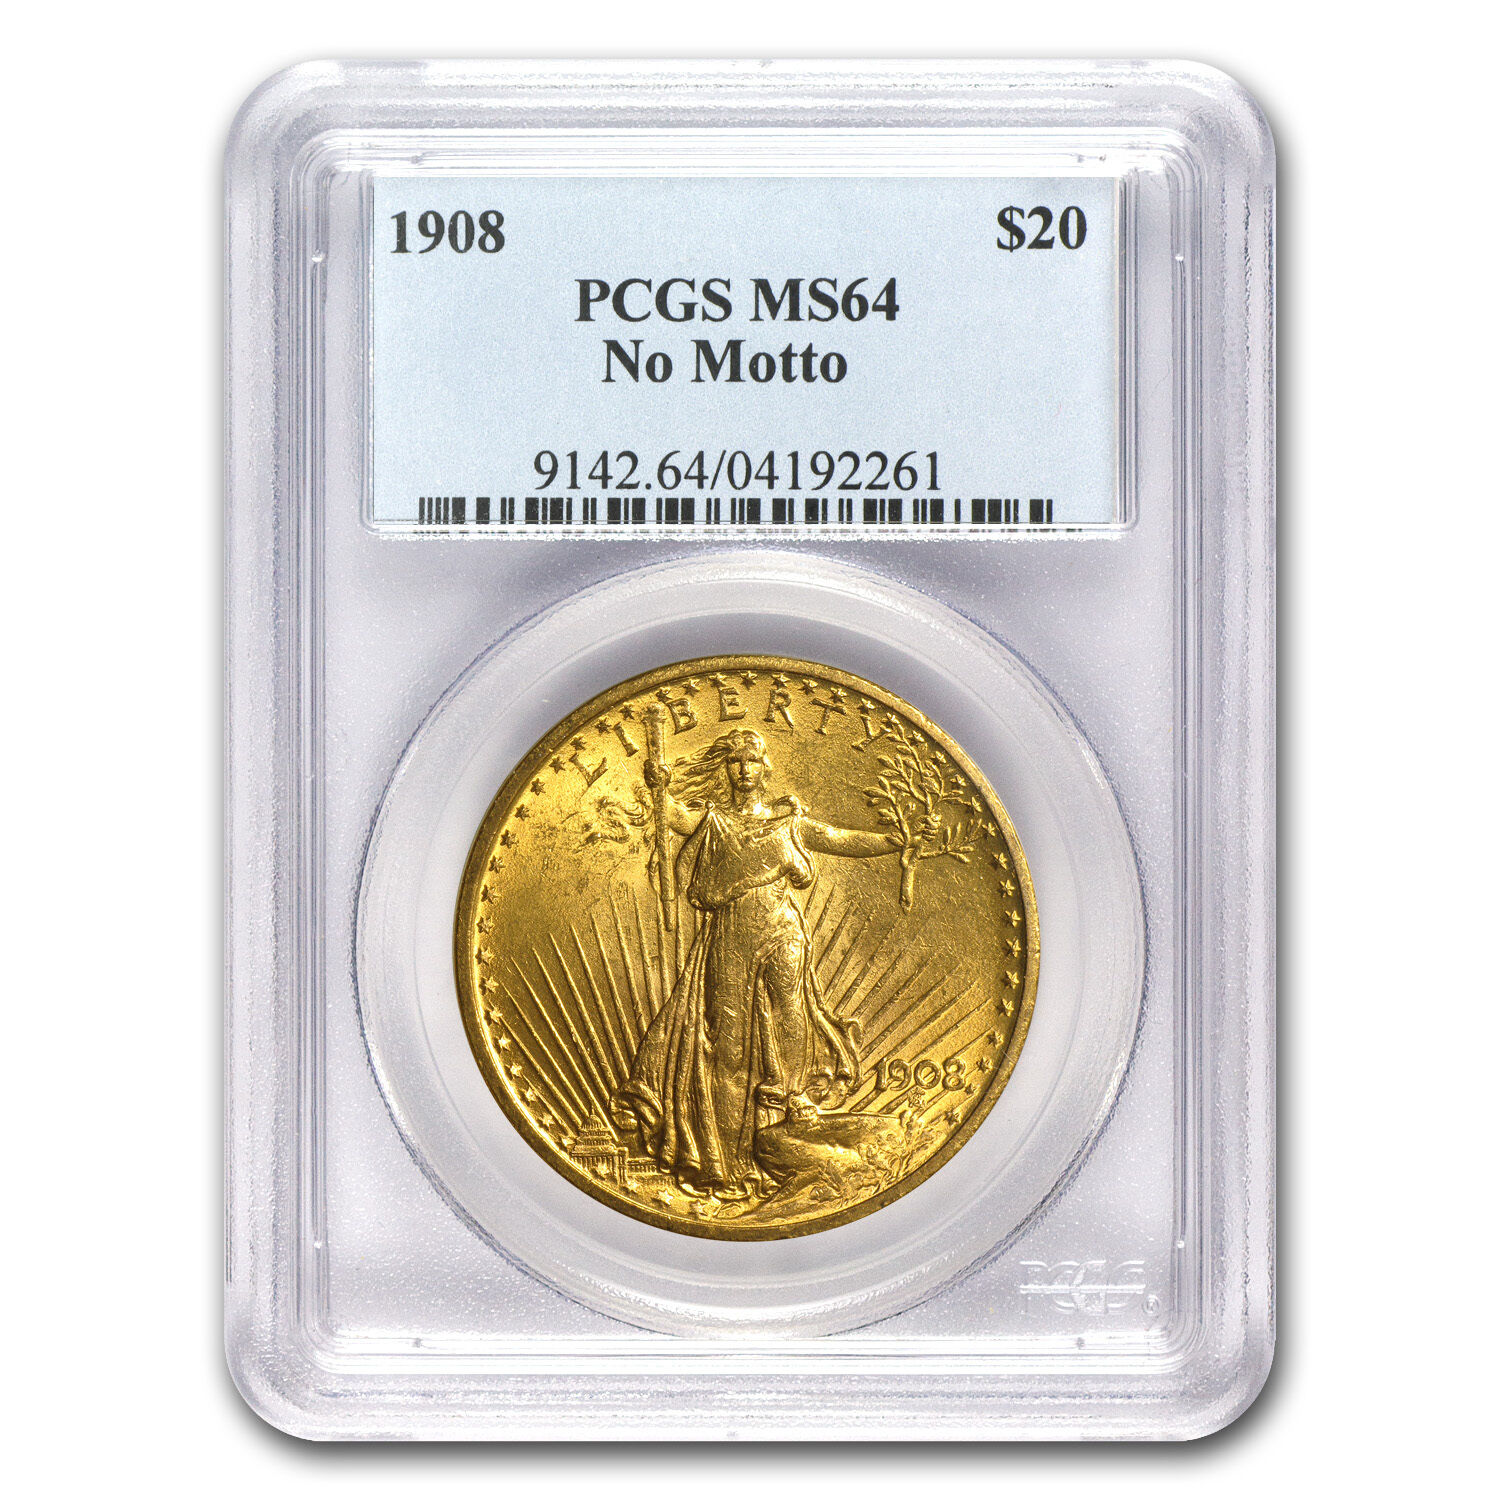 $20 Saint-Gaudens Gold Double Eagle Coin - Random Year - MS-64 PCGS - SKU #7224